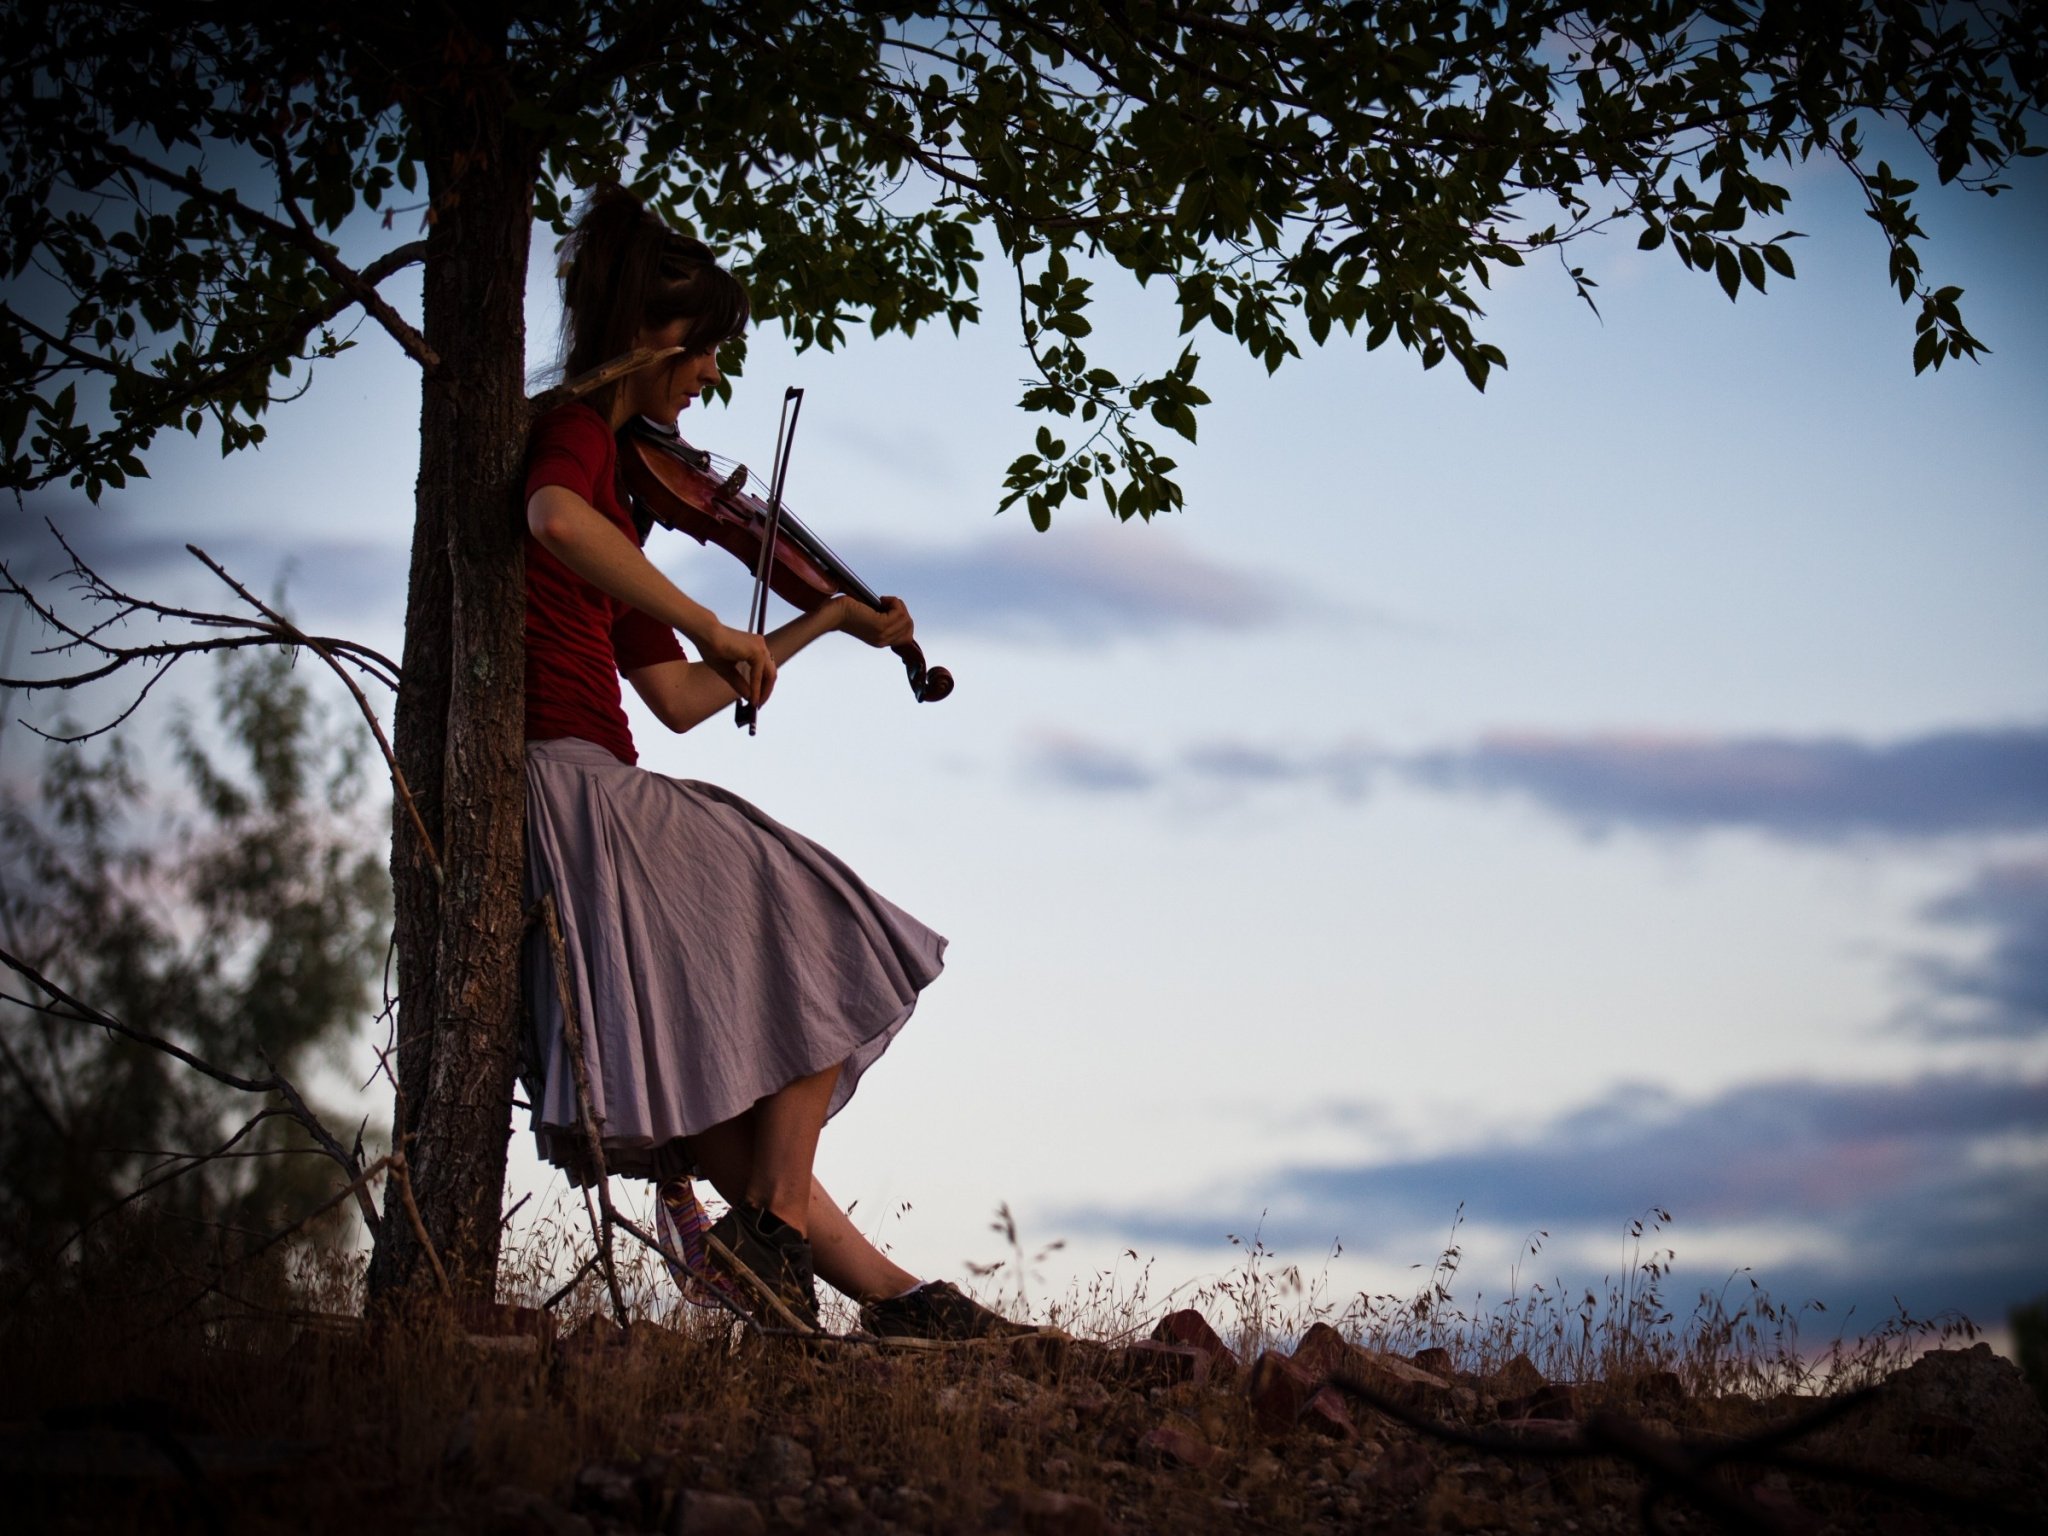 Girl woman песня. Девушка со скрипкой на природе. Фотосессия со скрипкой на природе. Девочка со скрипкой на улице.